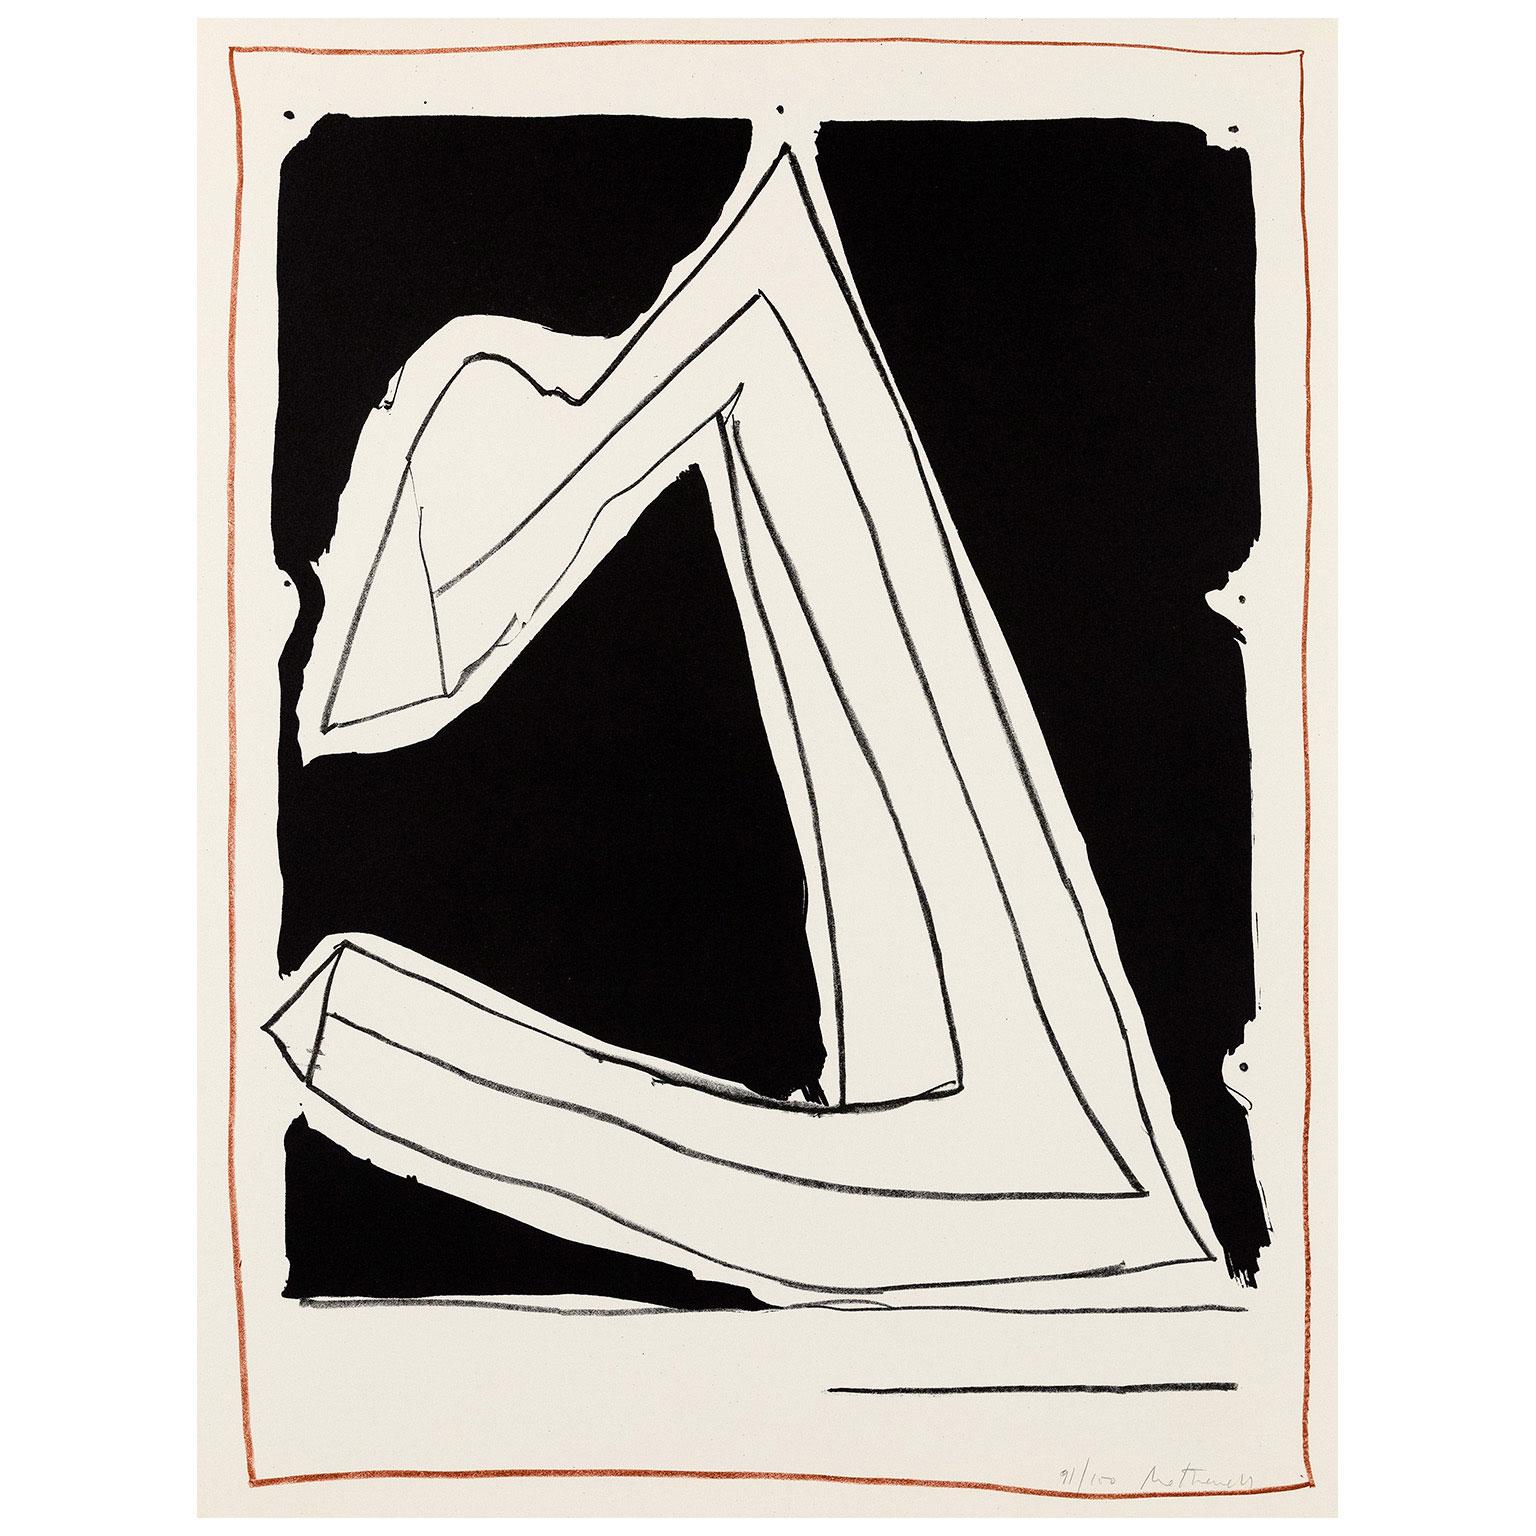 What art movement was Robert Motherwell?